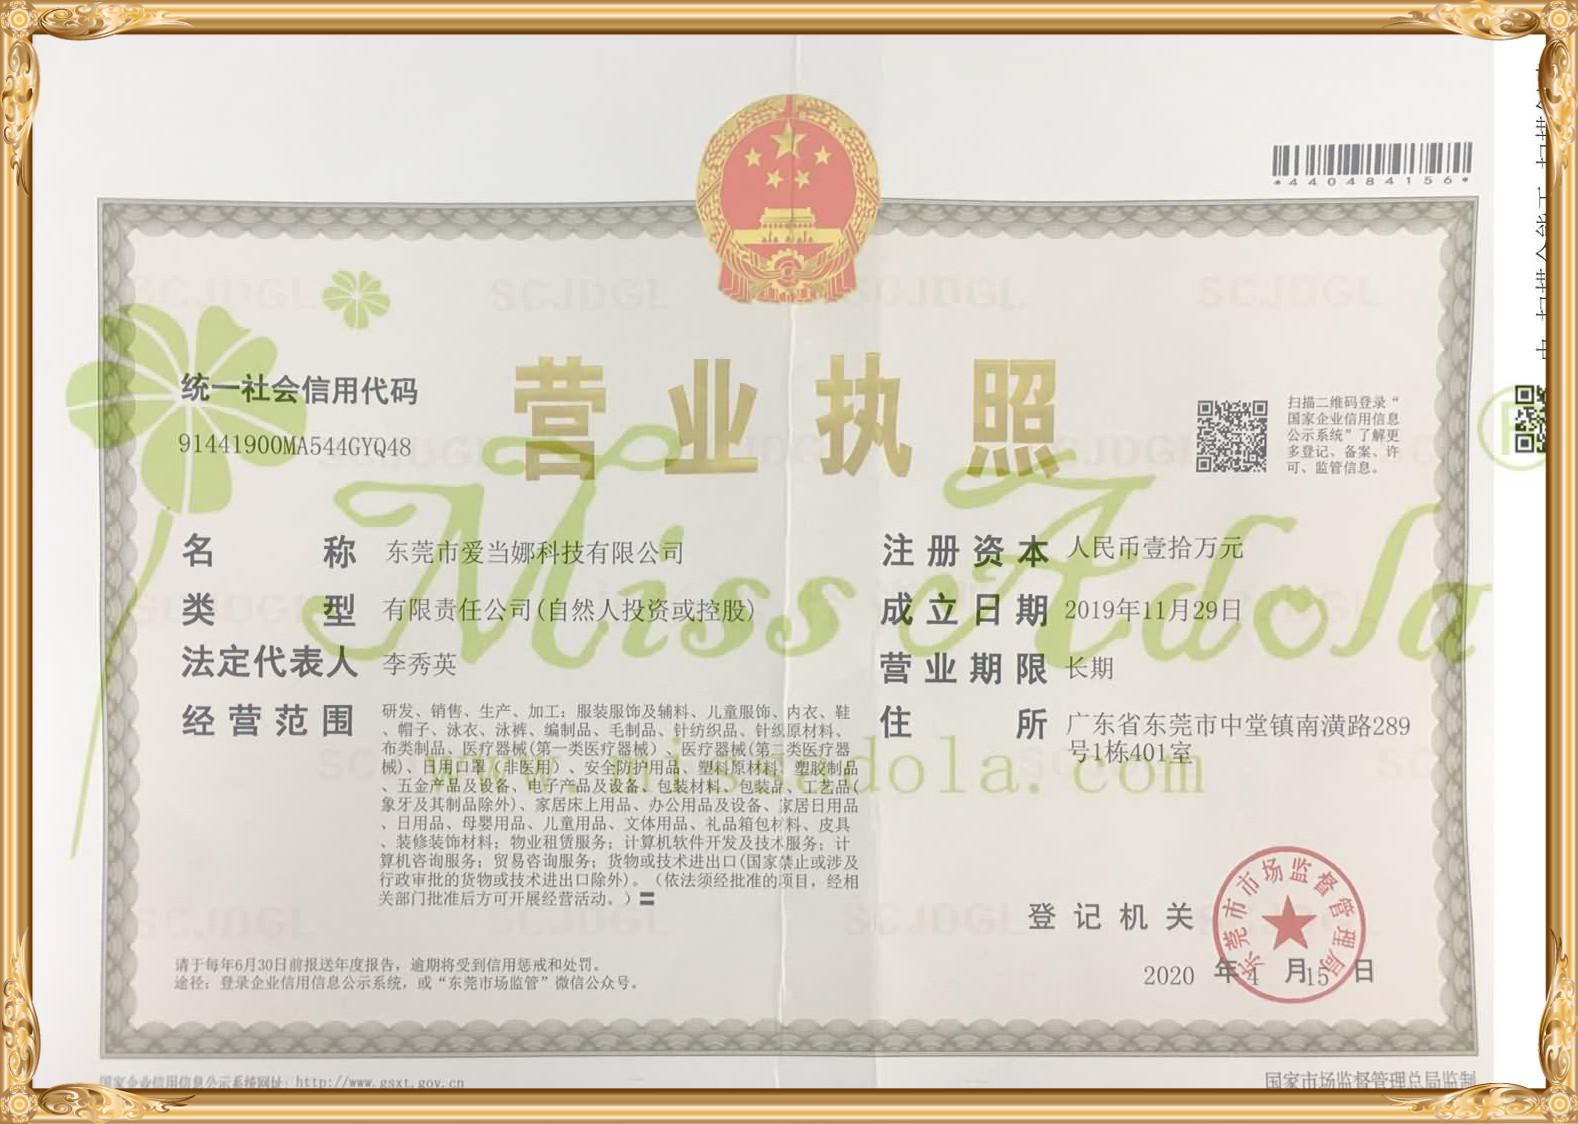 Dongguan Missadola business license